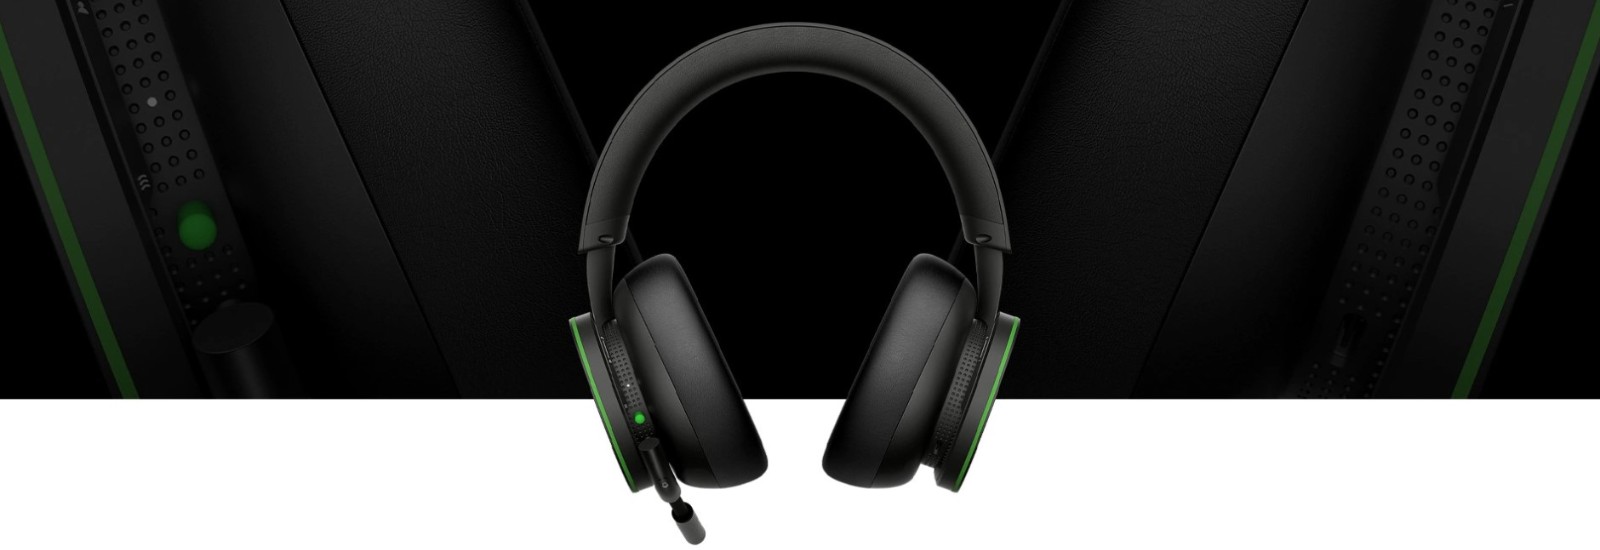 Xbox无线耳机3月16日发售 售价99.99美元